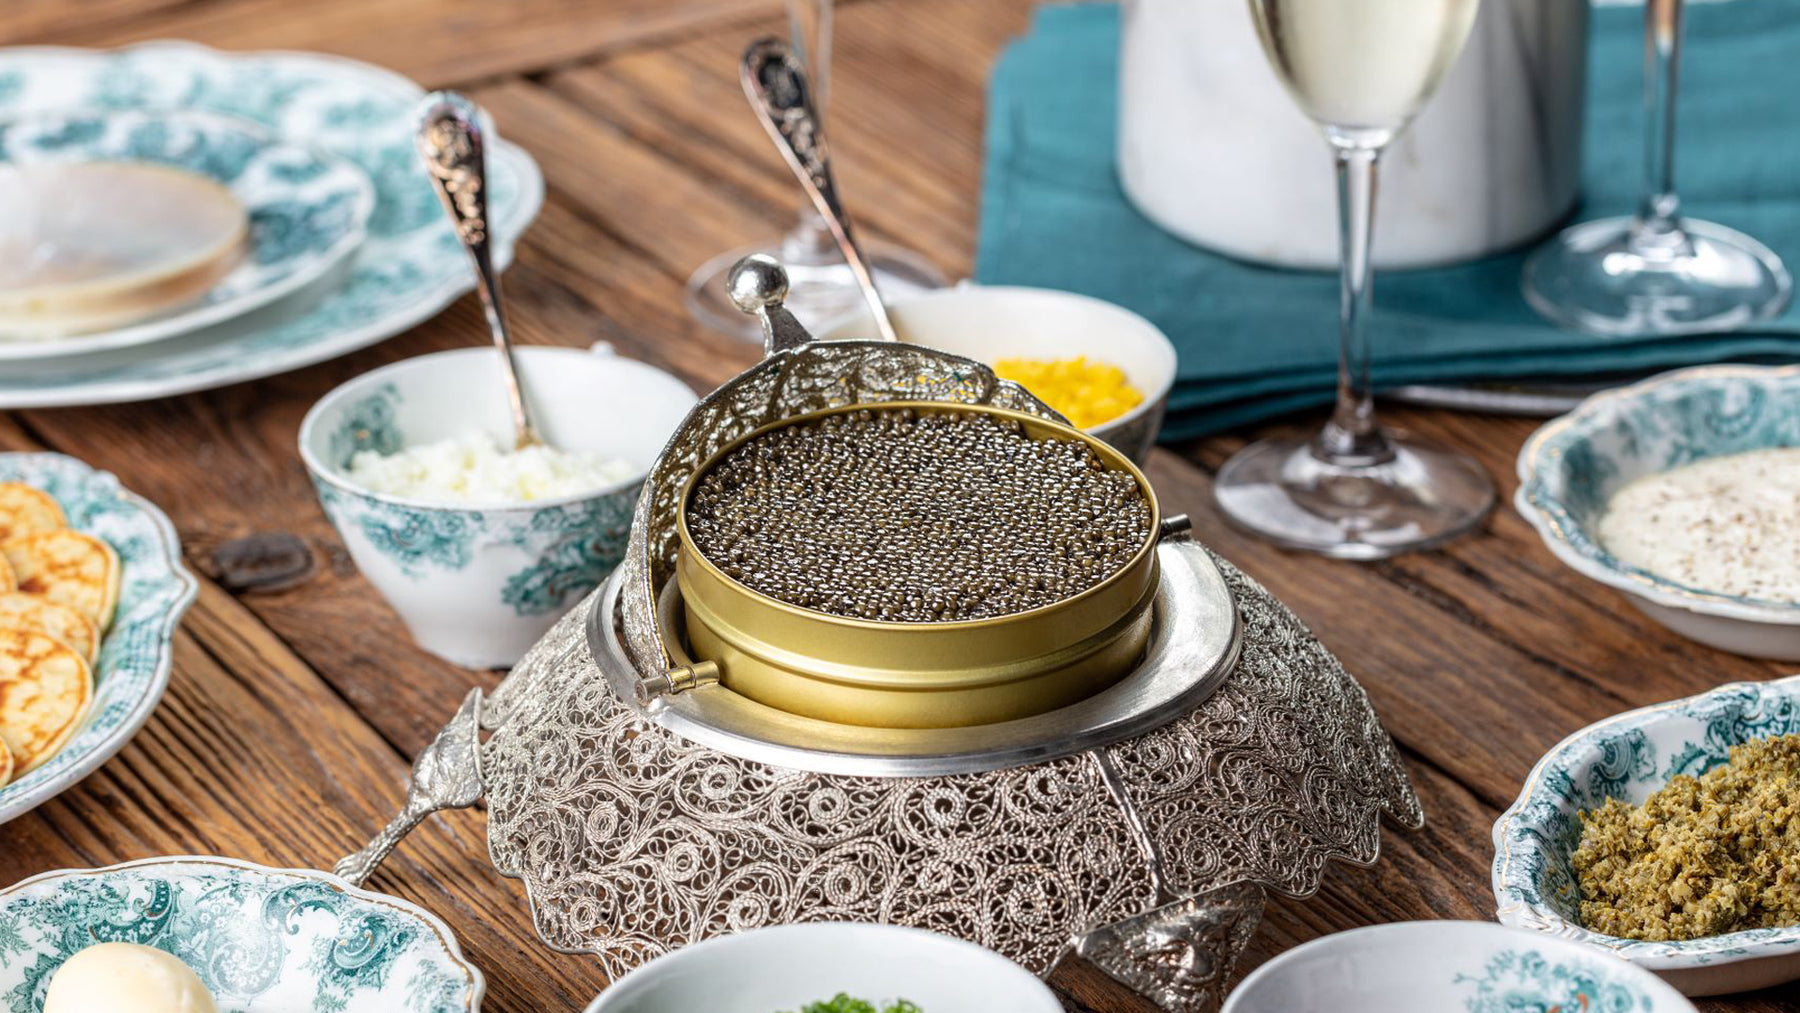 Creating Your Own “Caviar Flight”